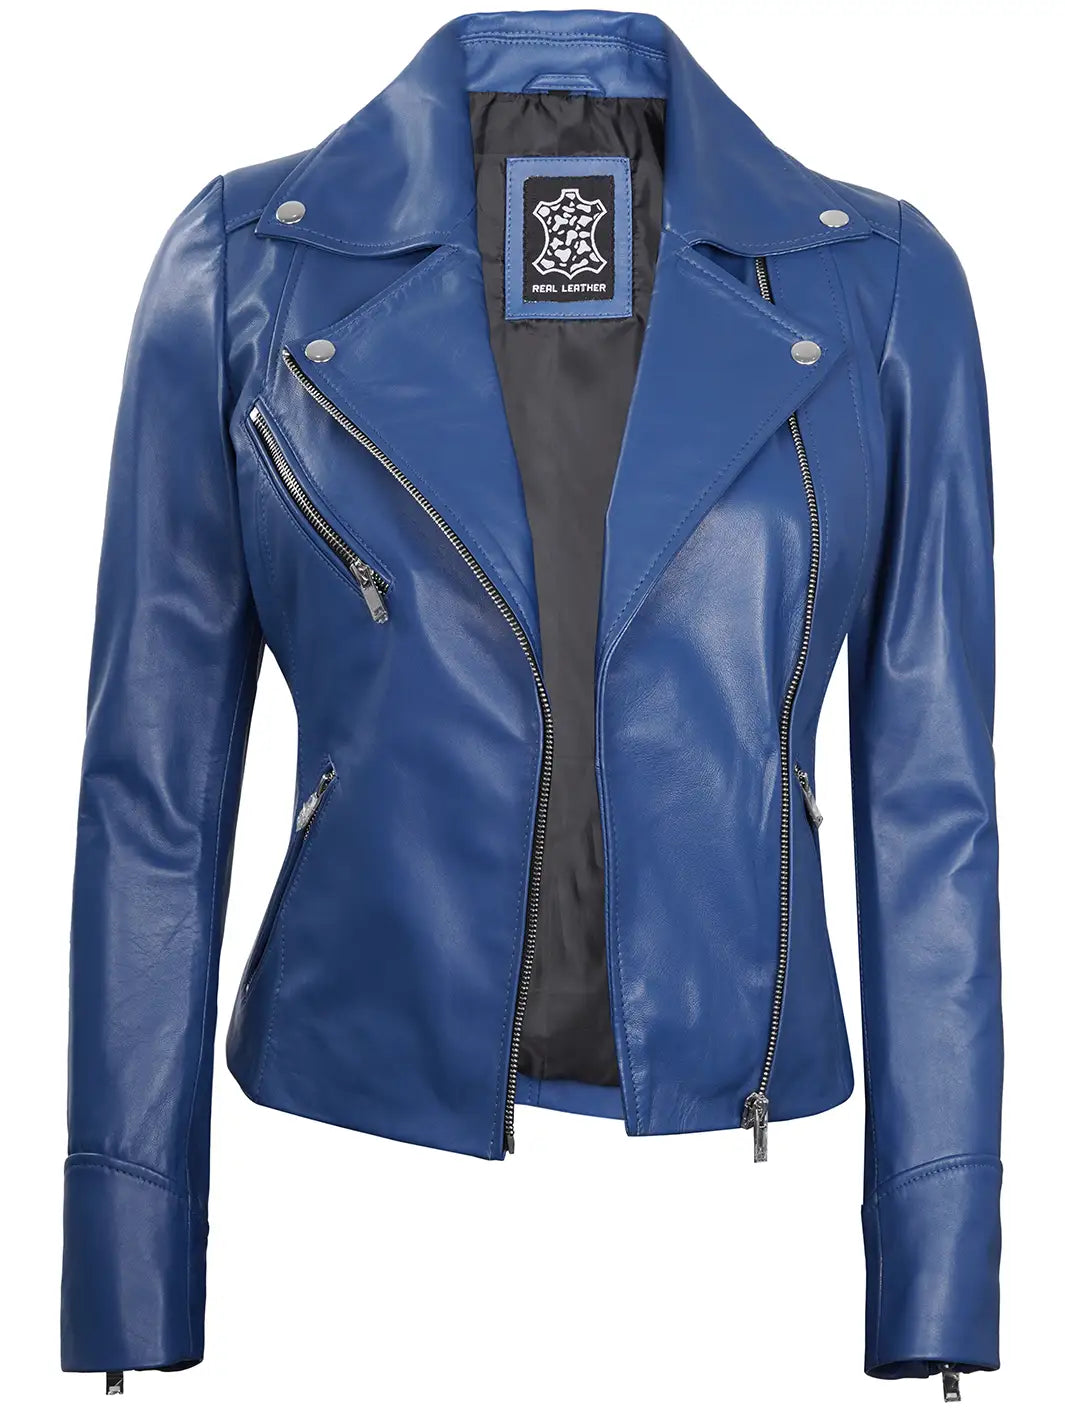 Women blue leather moto jacket